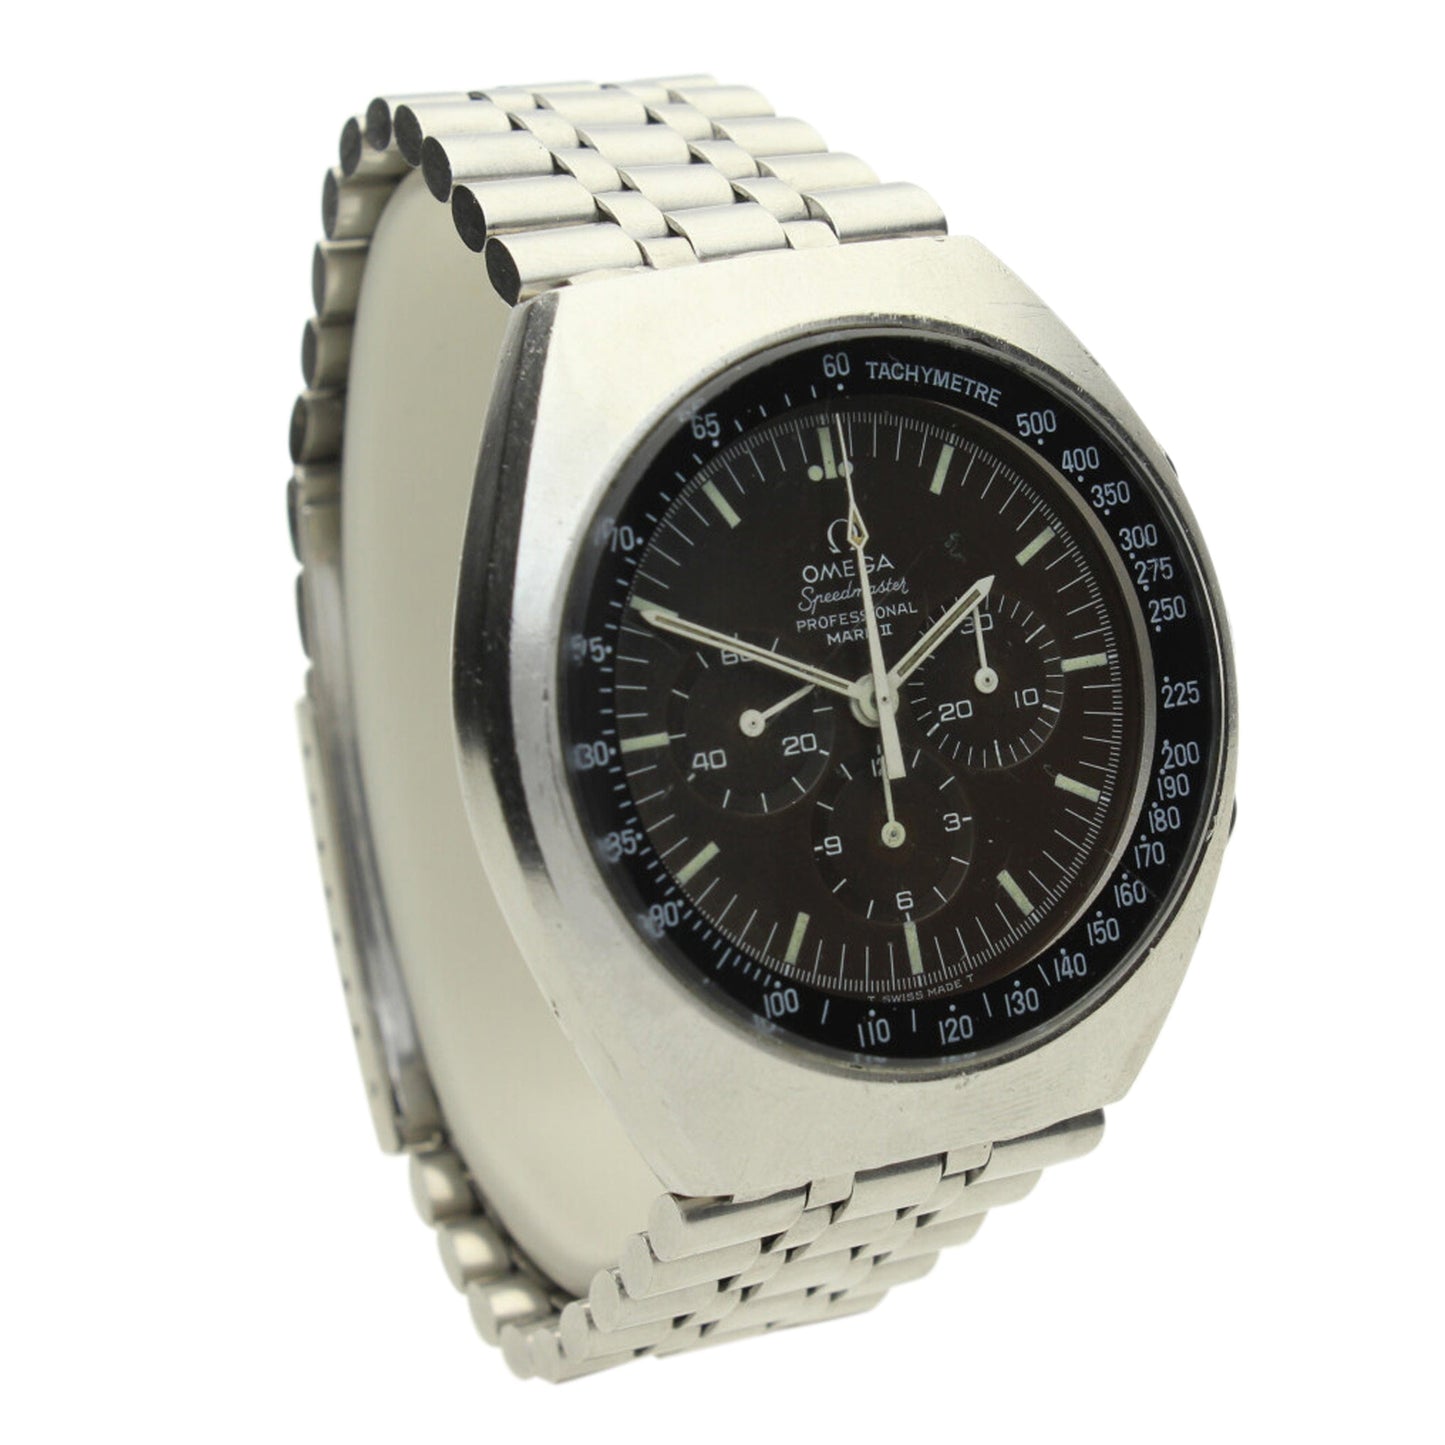 Stainless steel Speedmaster Mark II chronograph wristwatch. Made 1970